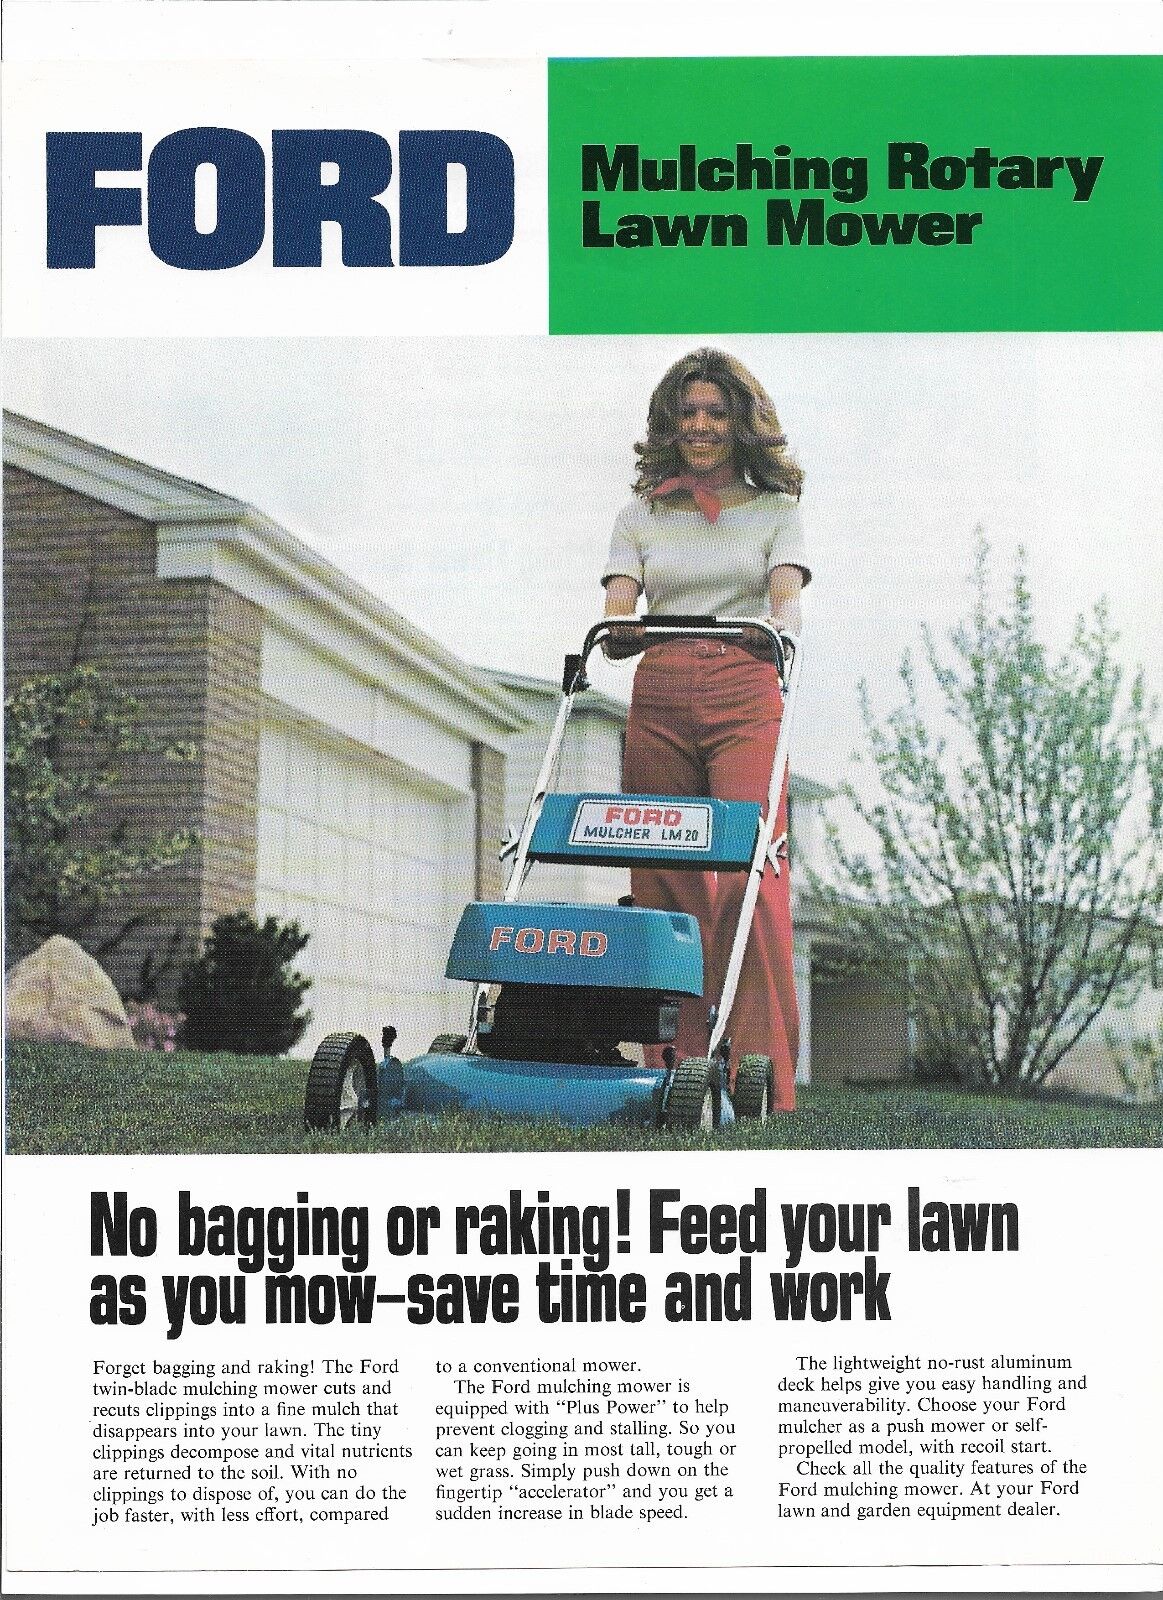 Original OE OEM Ford Mulching Rotary Lawn Mower Dealer Sales Brochure Spec Sheet